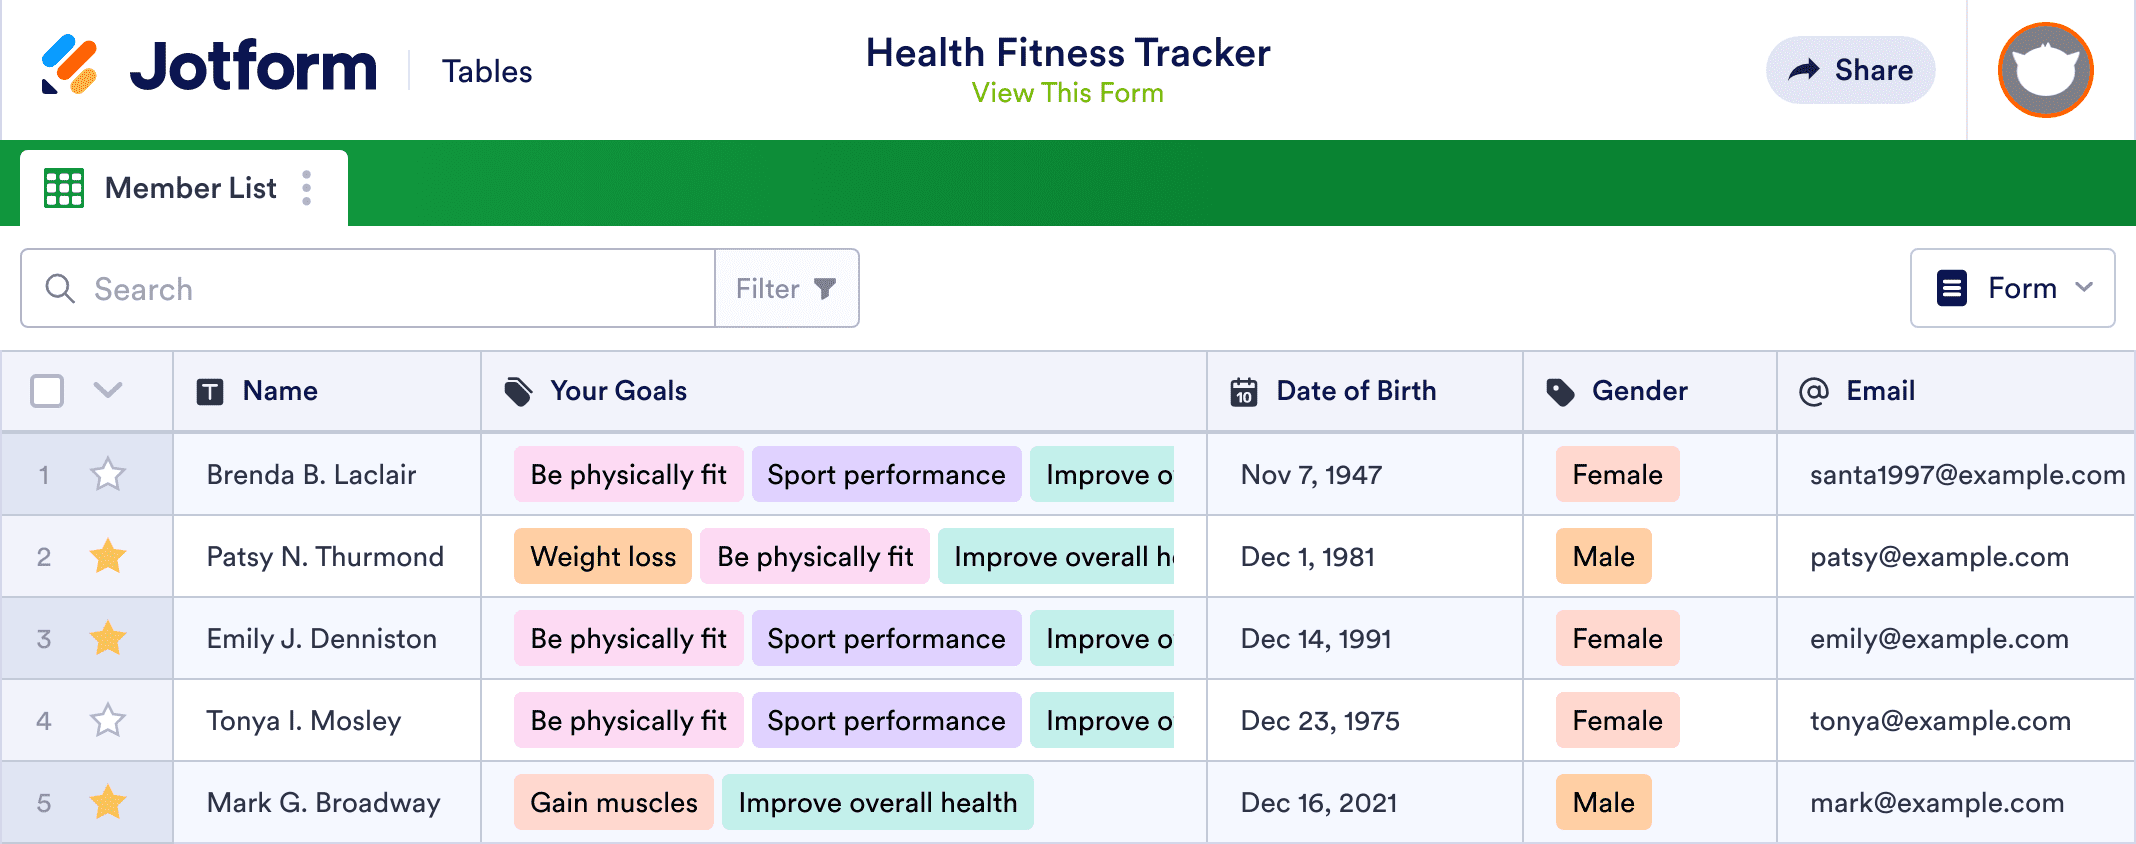 Health Fitness Tracker